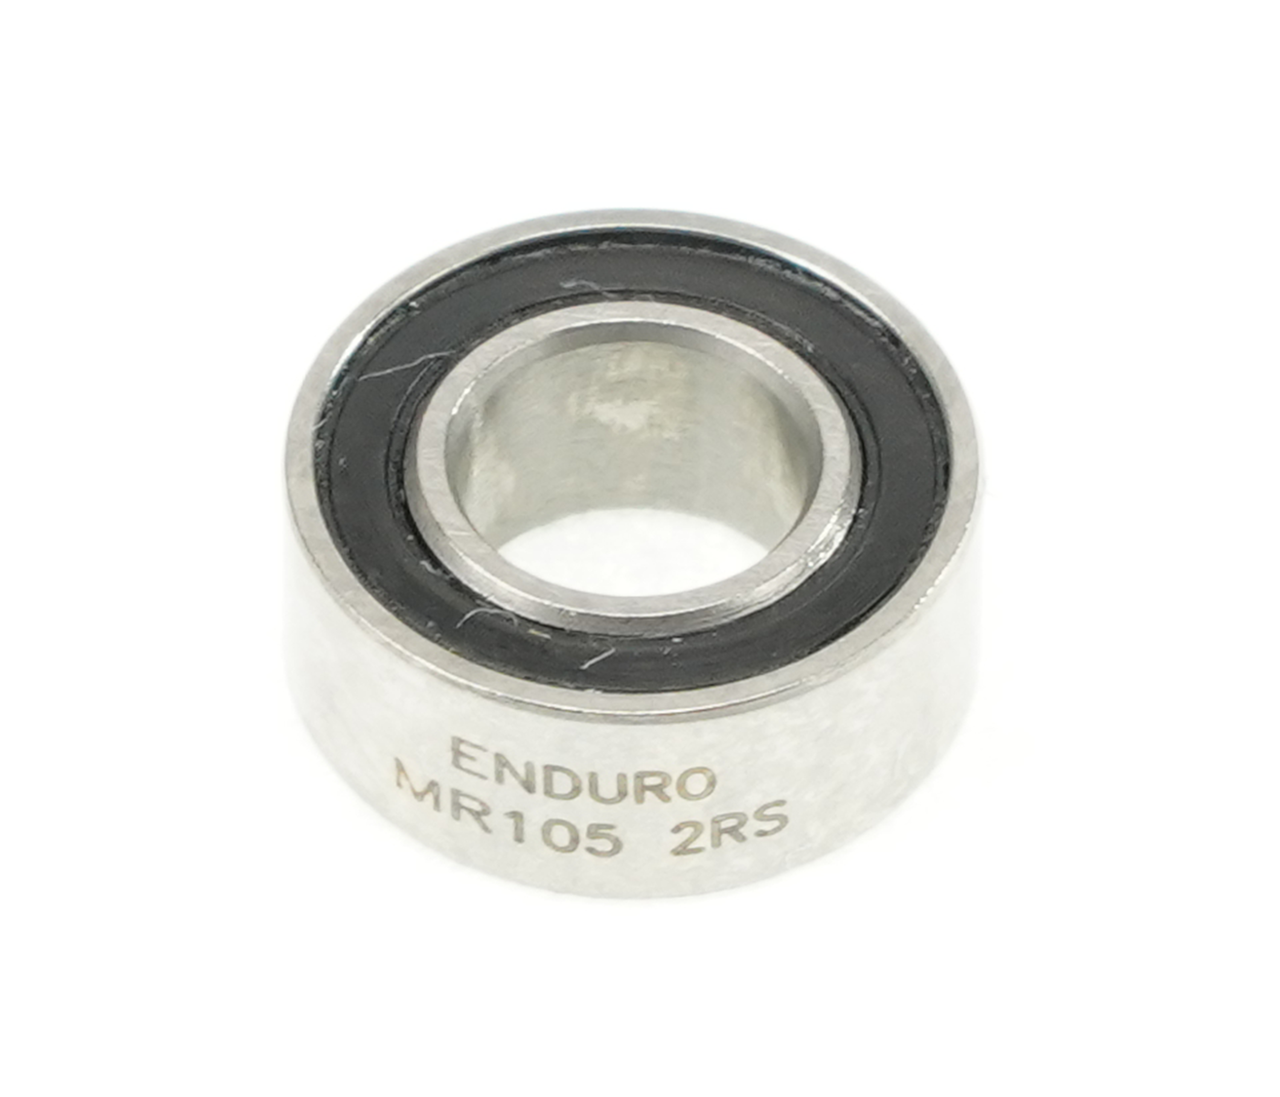 Enduro MR 105 2RS - ABEC-3 Radial Bearing (C3 Clearance) - 5mm x 10mm x 4mm